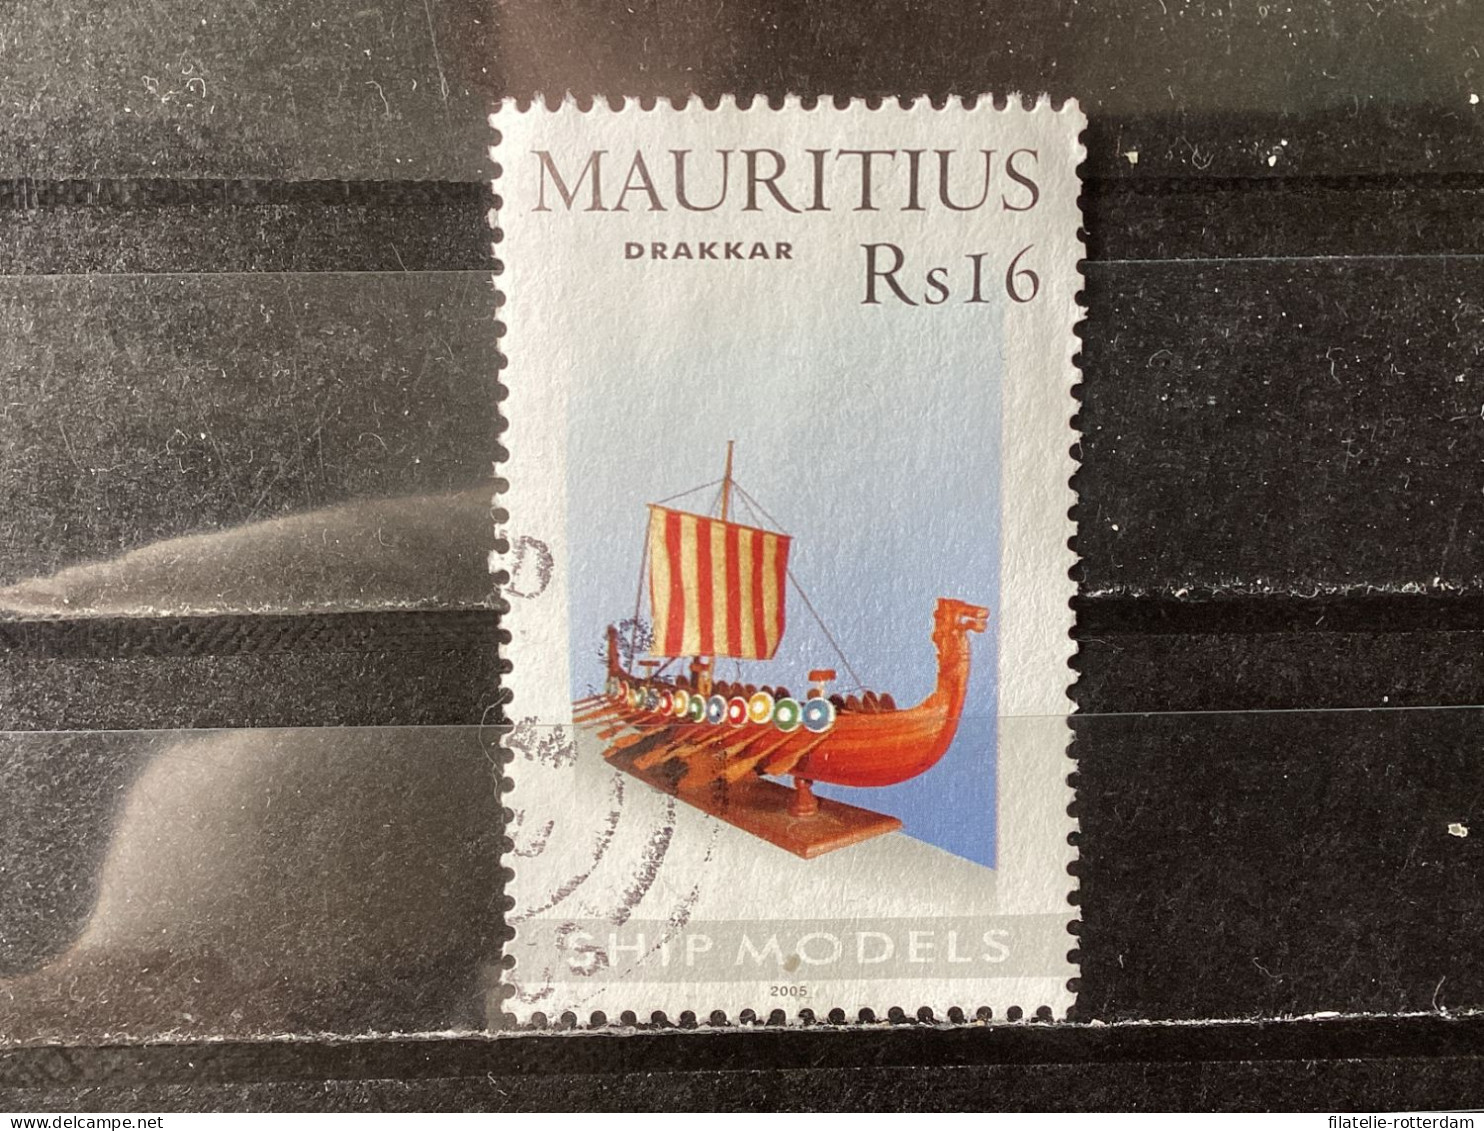 Mauritius - Ship Models (16) 2005 - Maurice (1968-...)